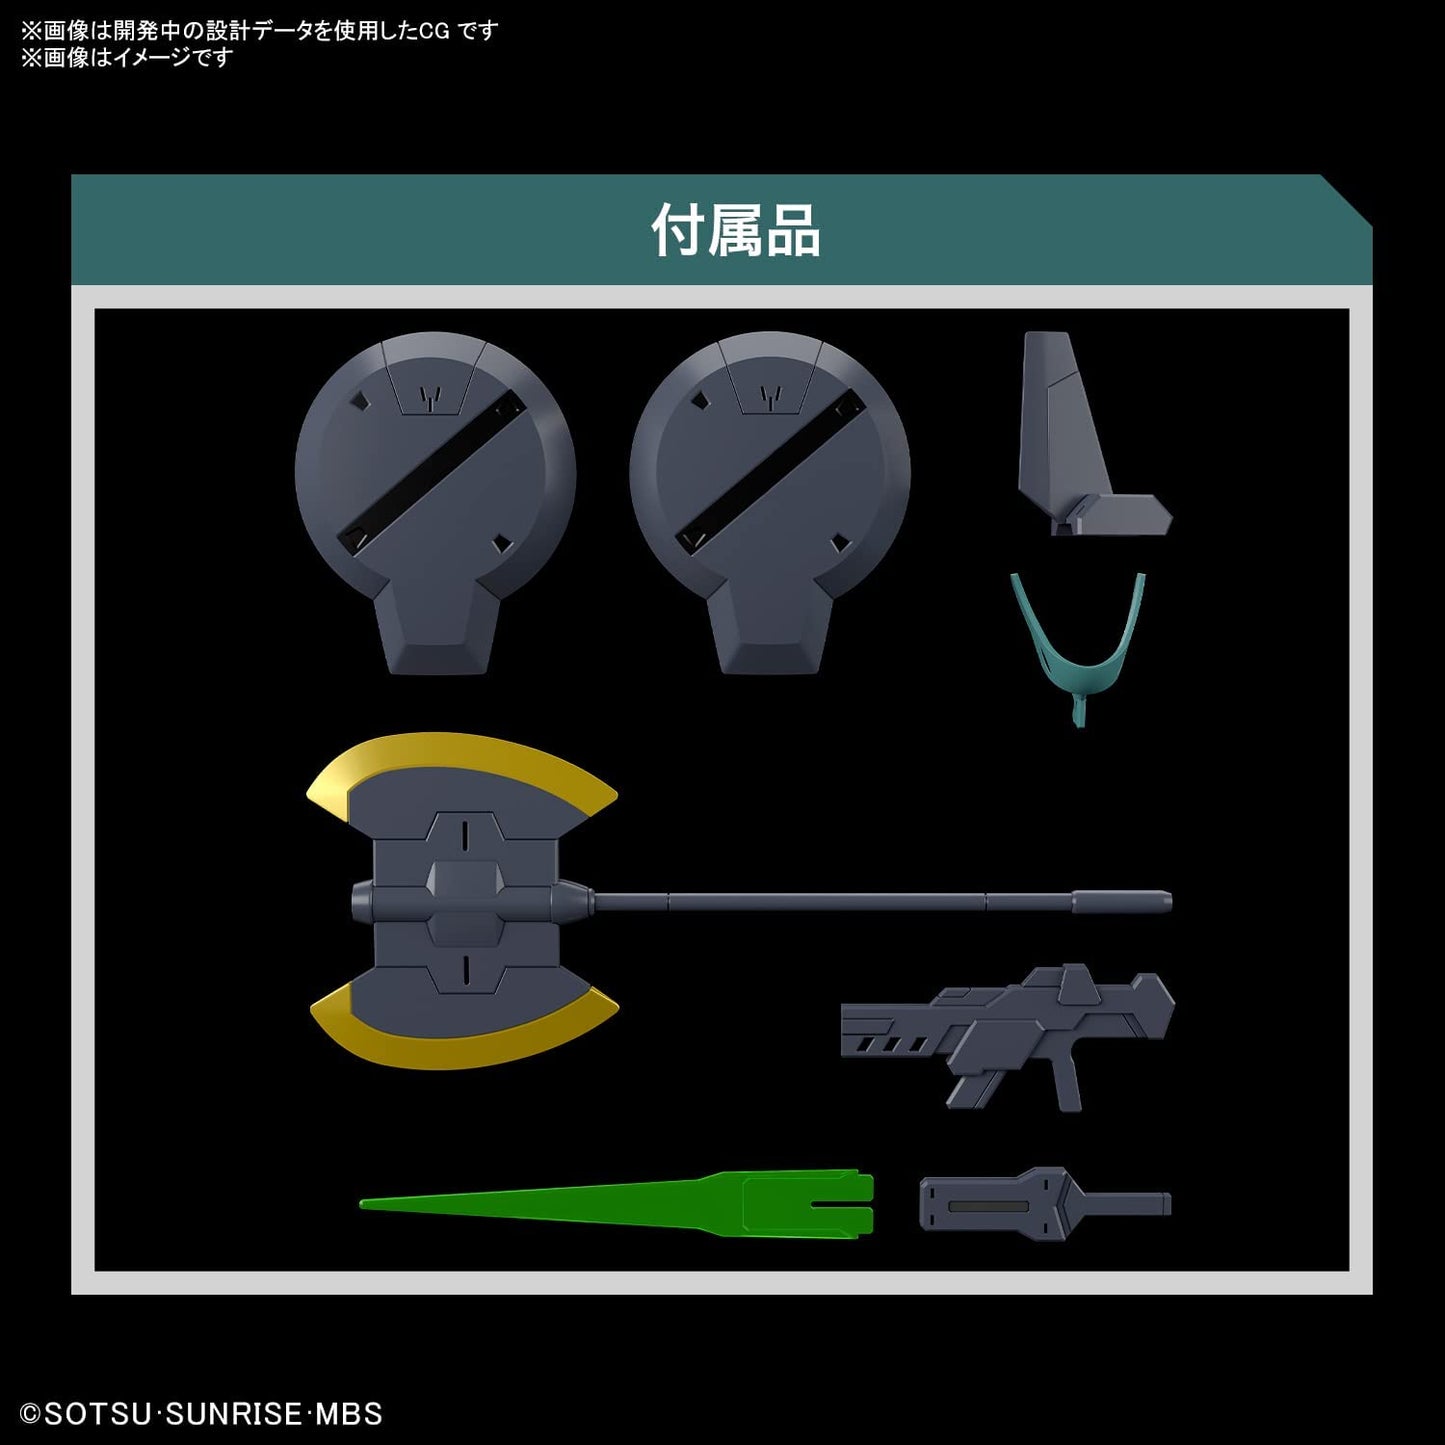 Bandai HG 1/144 Mobile Suit Gundam La bruja de Mercury LAUDA'S DILANZA Gundam Model Kit